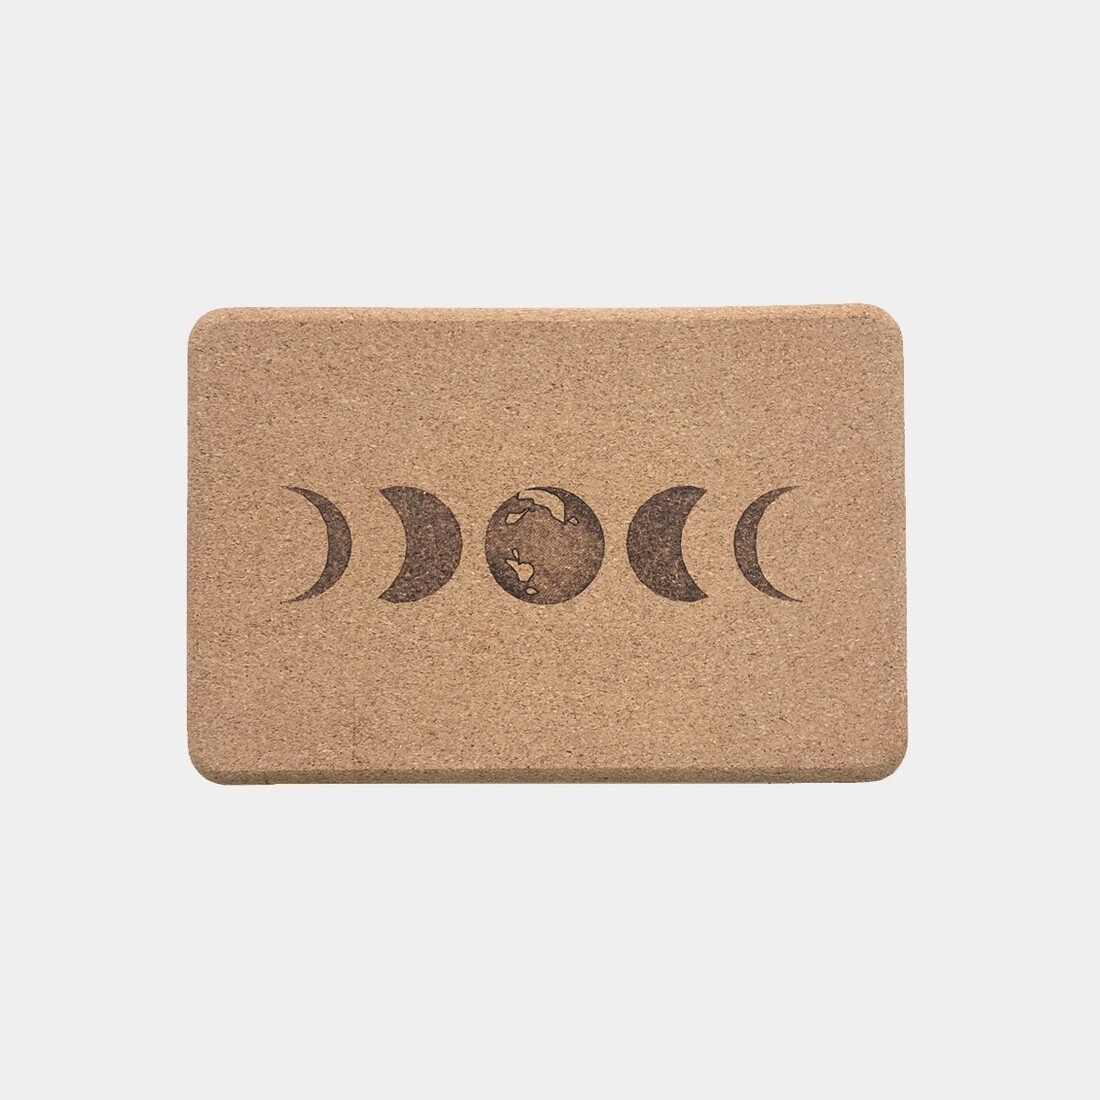 Moon Cork Brick (100% Natural Cork Yoga Block)